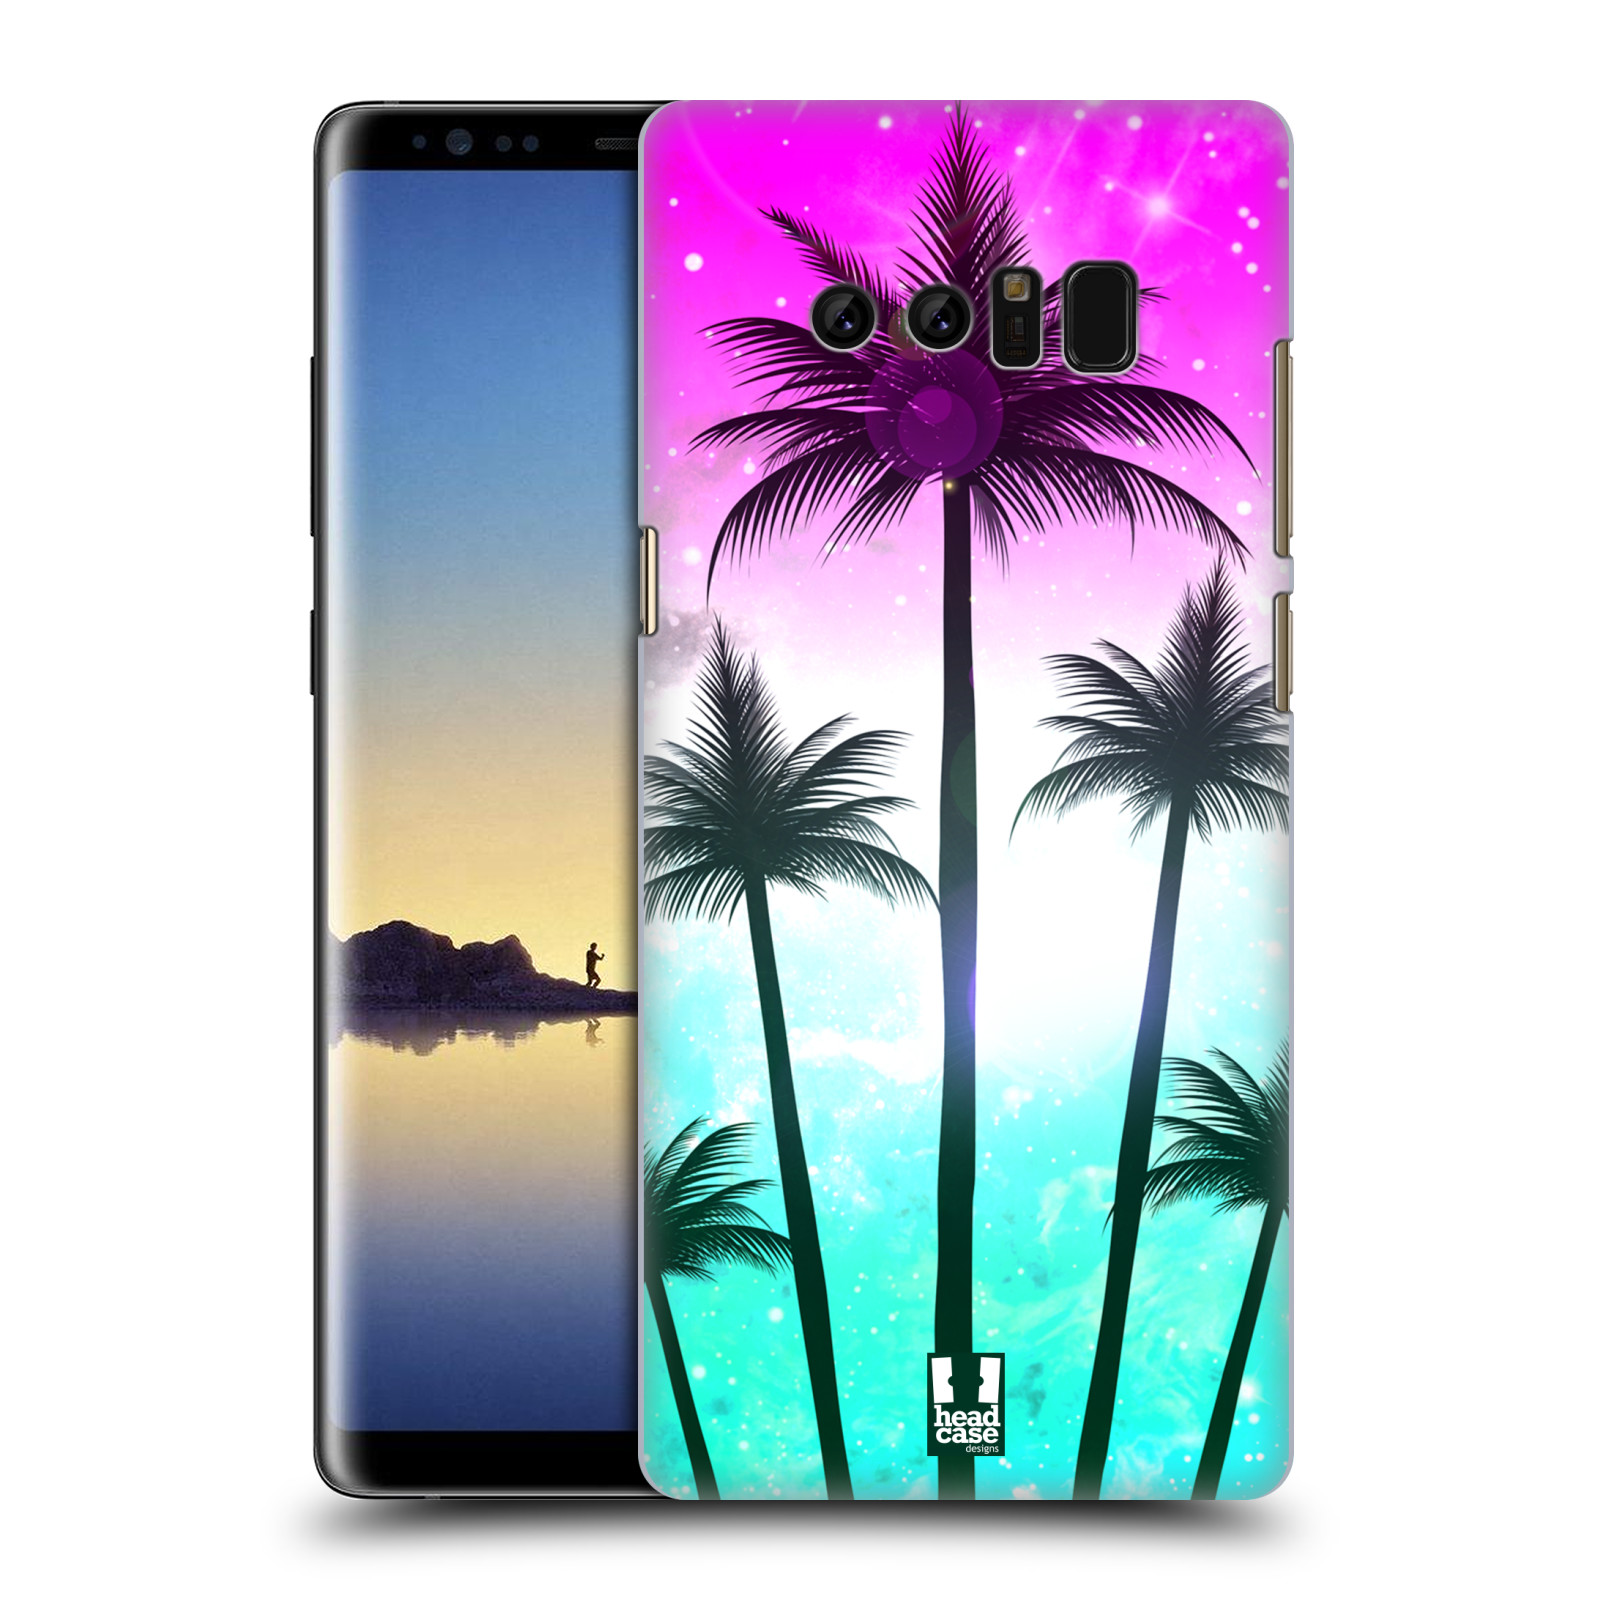 HEAD CASE plastový obal na mobil Samsung Galaxy Note 8 vzor Kreslený motiv silueta moře a palmy RŮŽOVÁ A TYRKYS